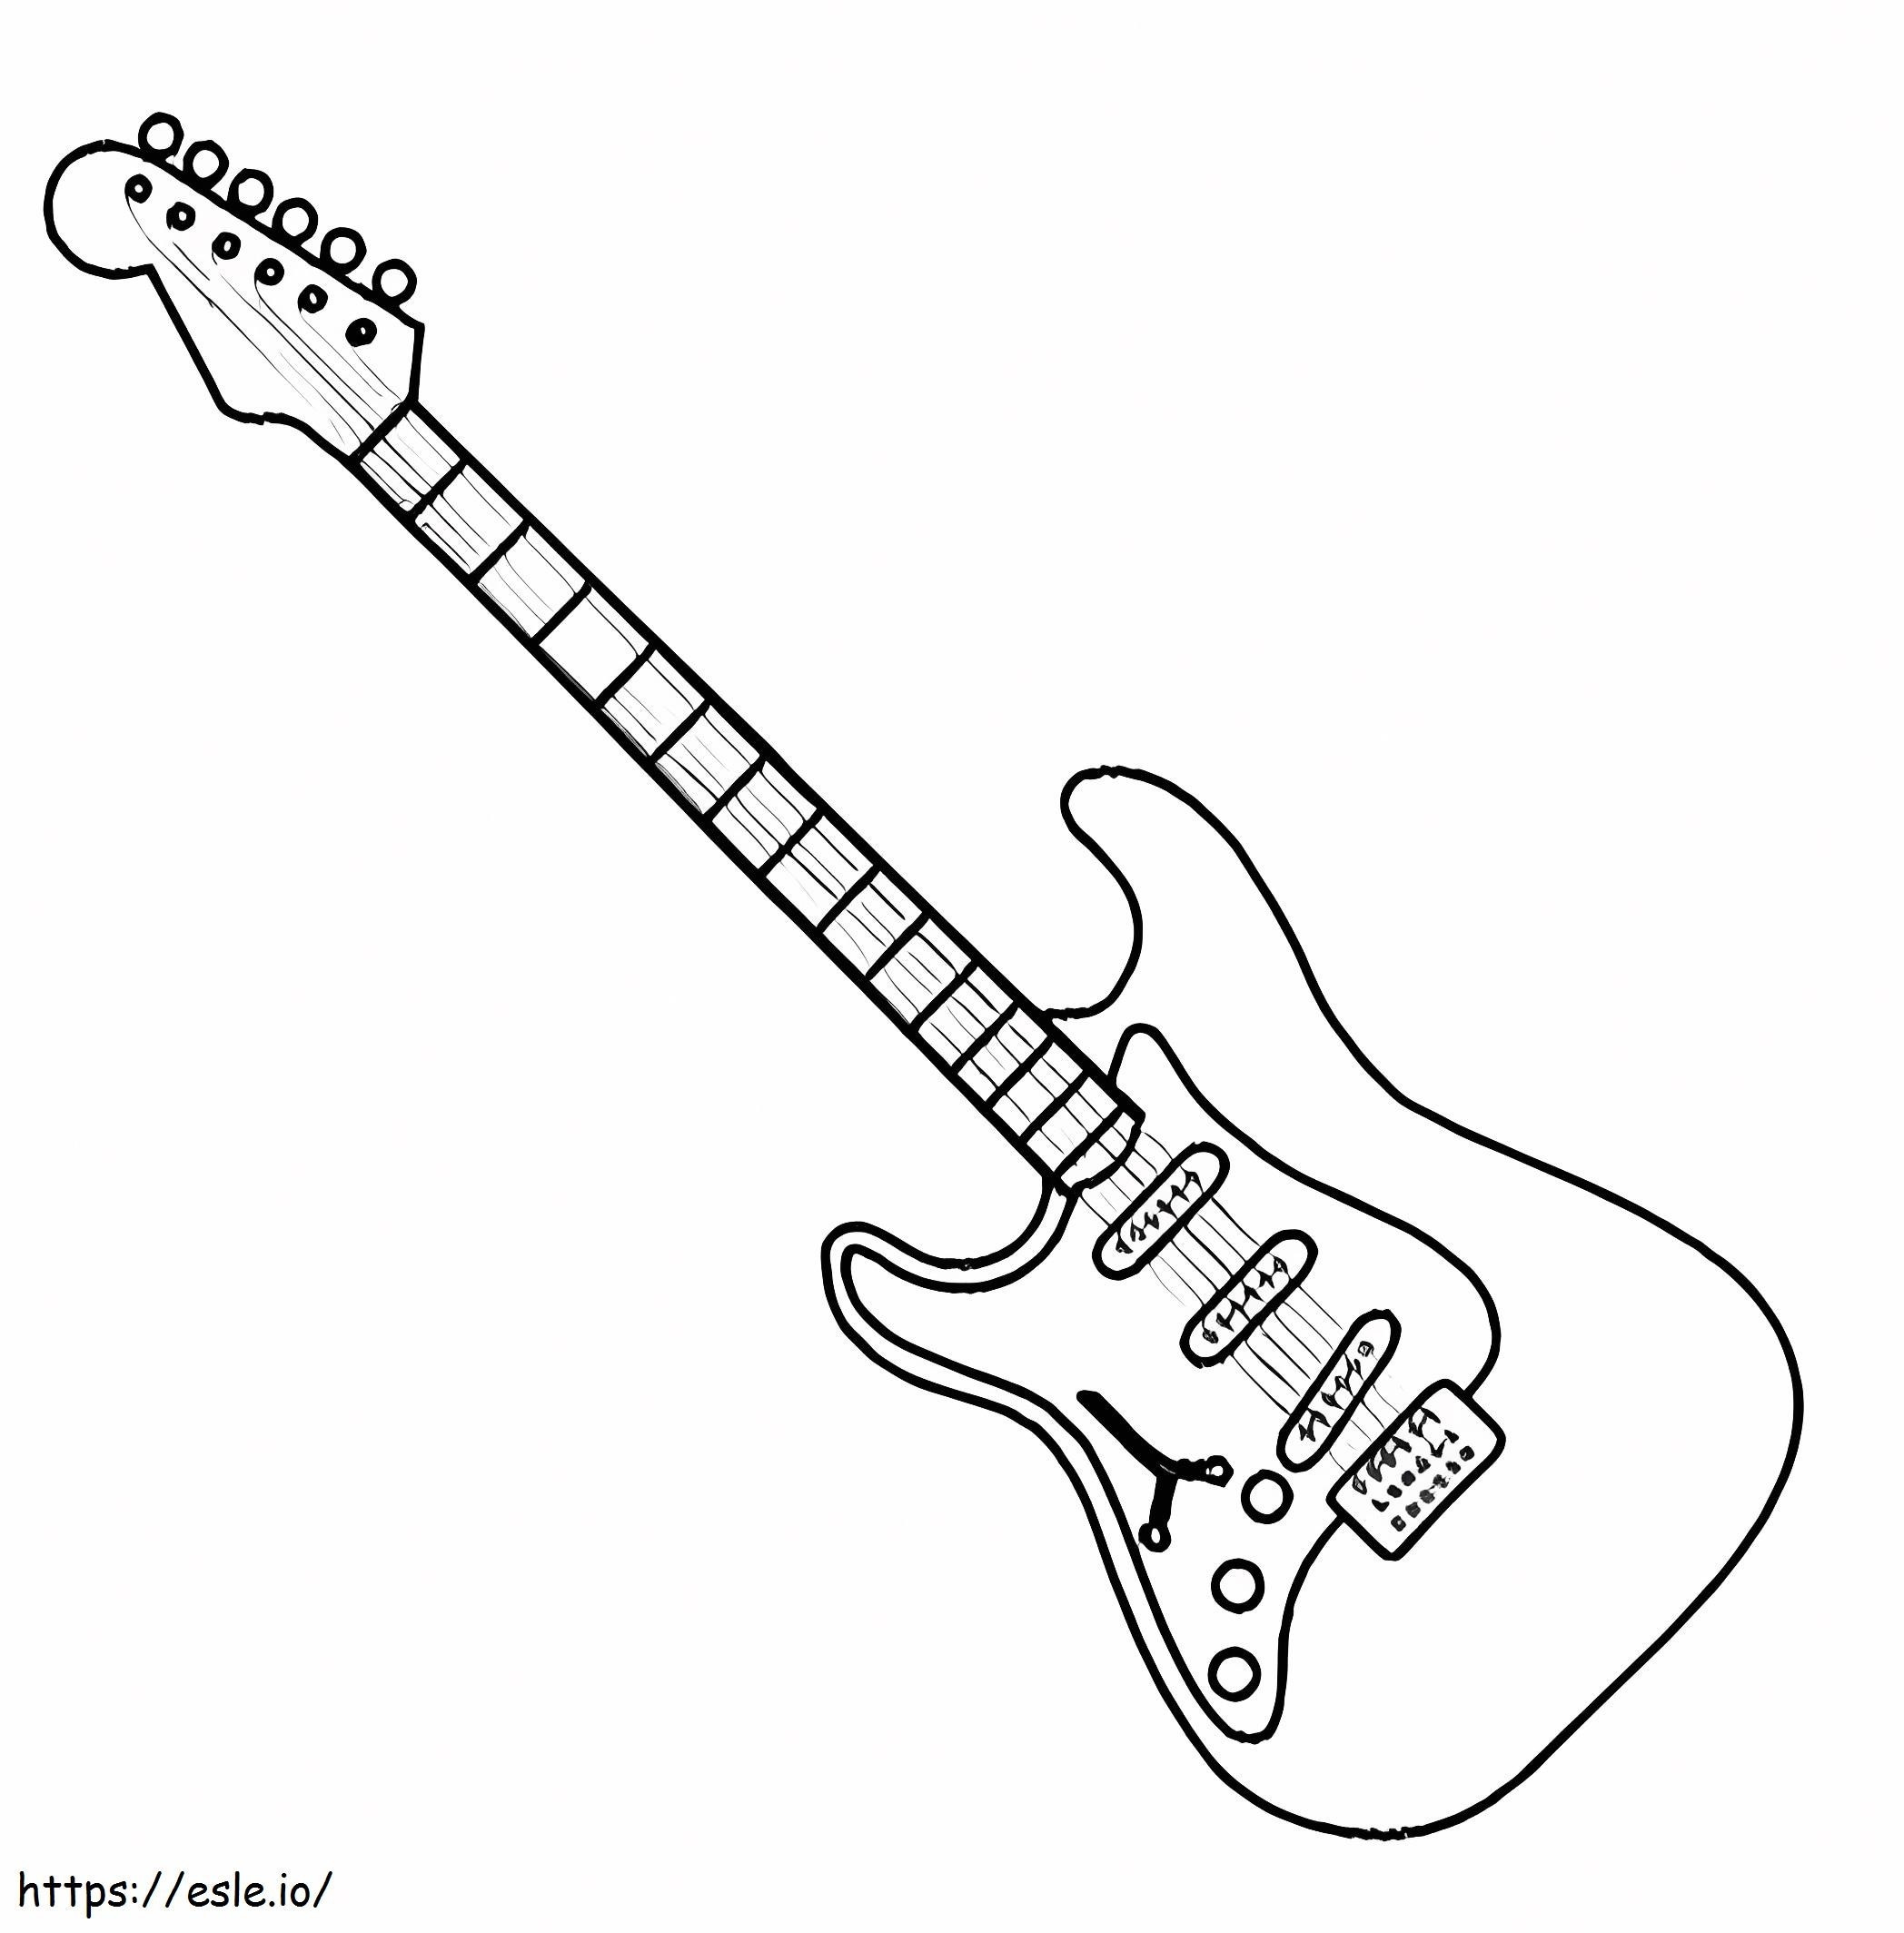 Electric Guitara4 coloring page